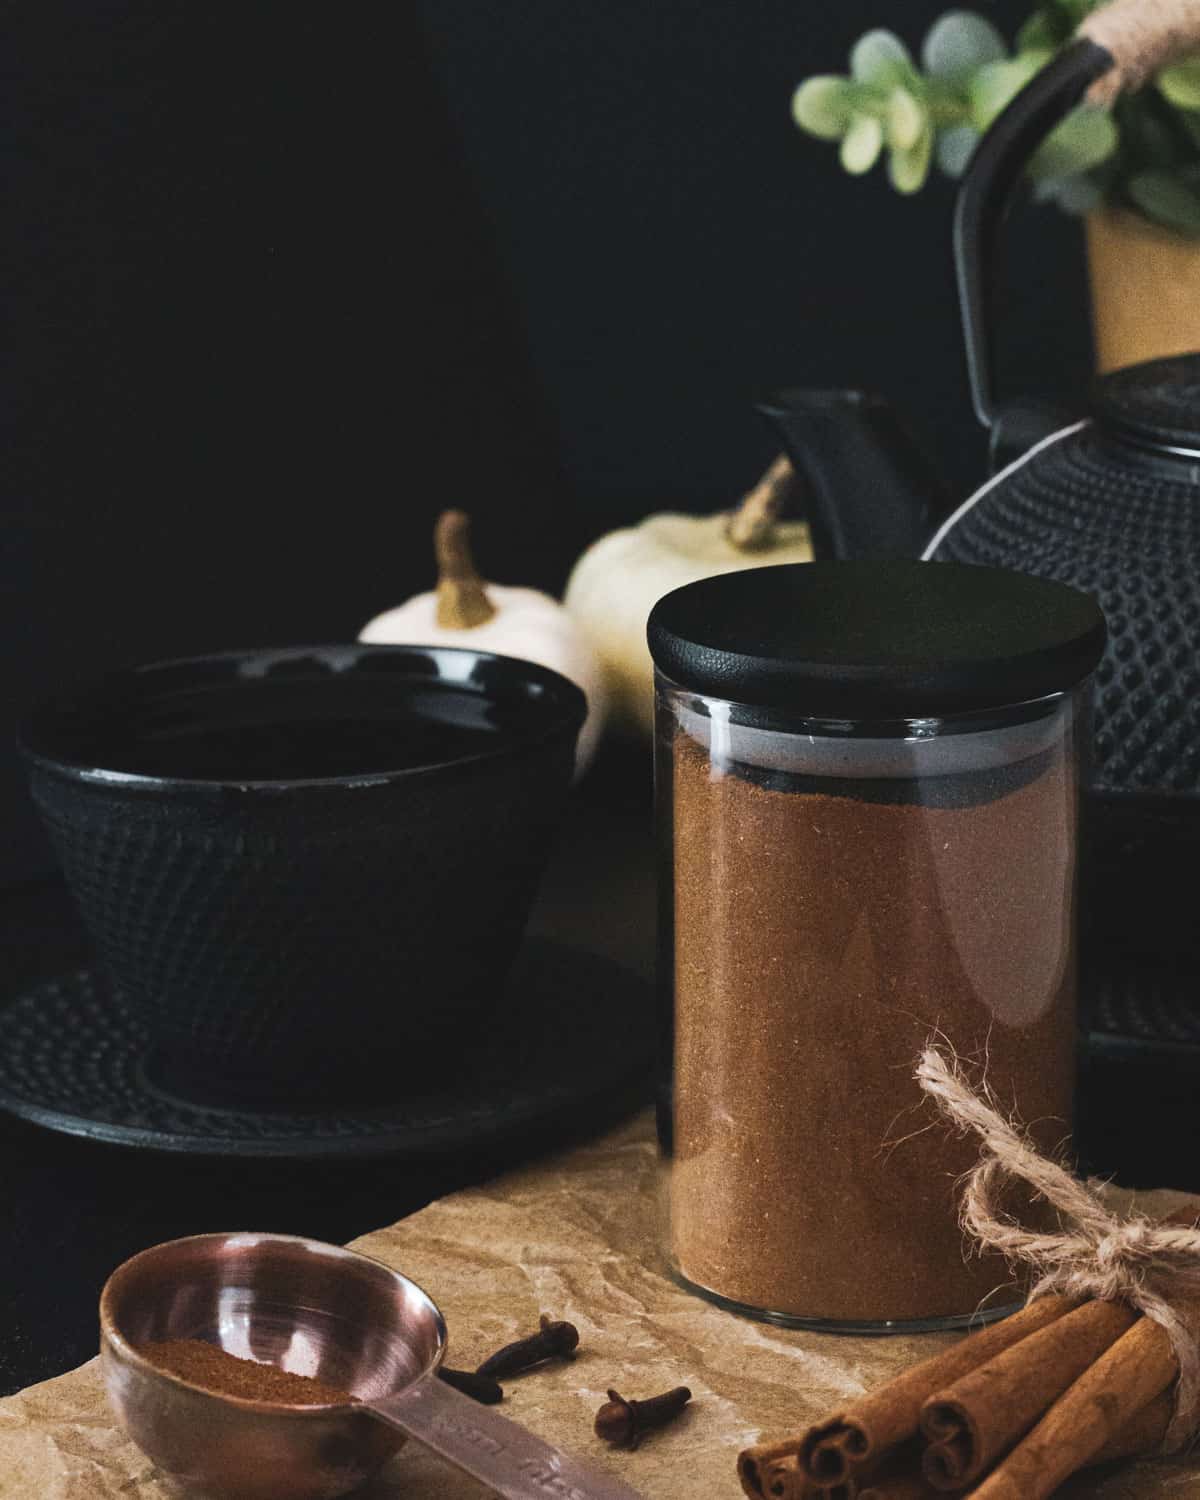 Chai spice next to a tea pot